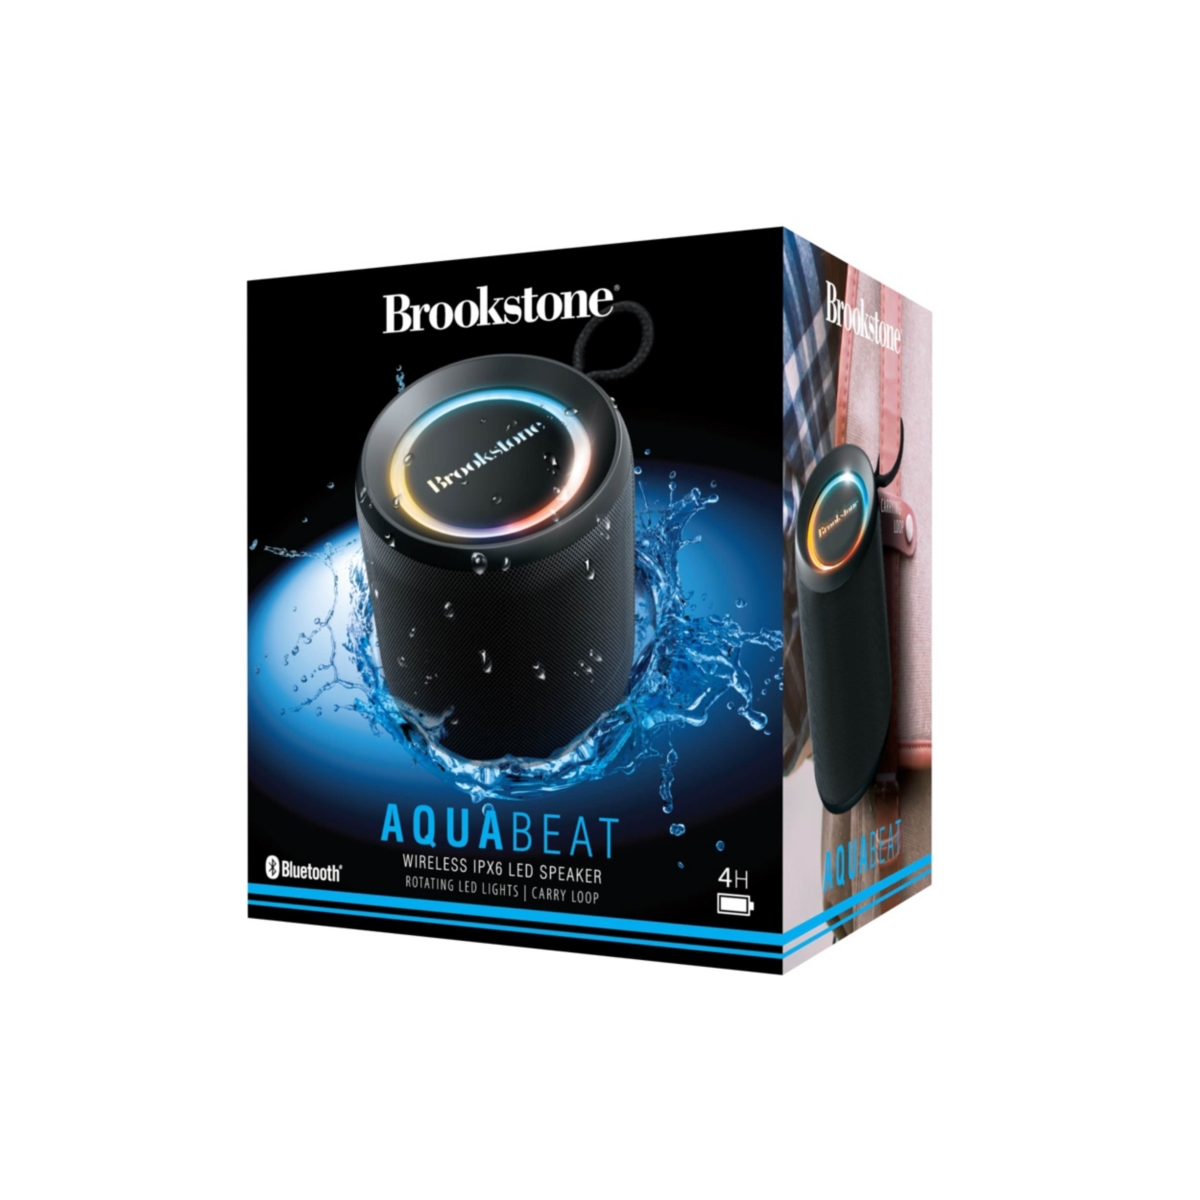 Brookstone Aquabeat Wireless Ipx6 Led Speaker In Black